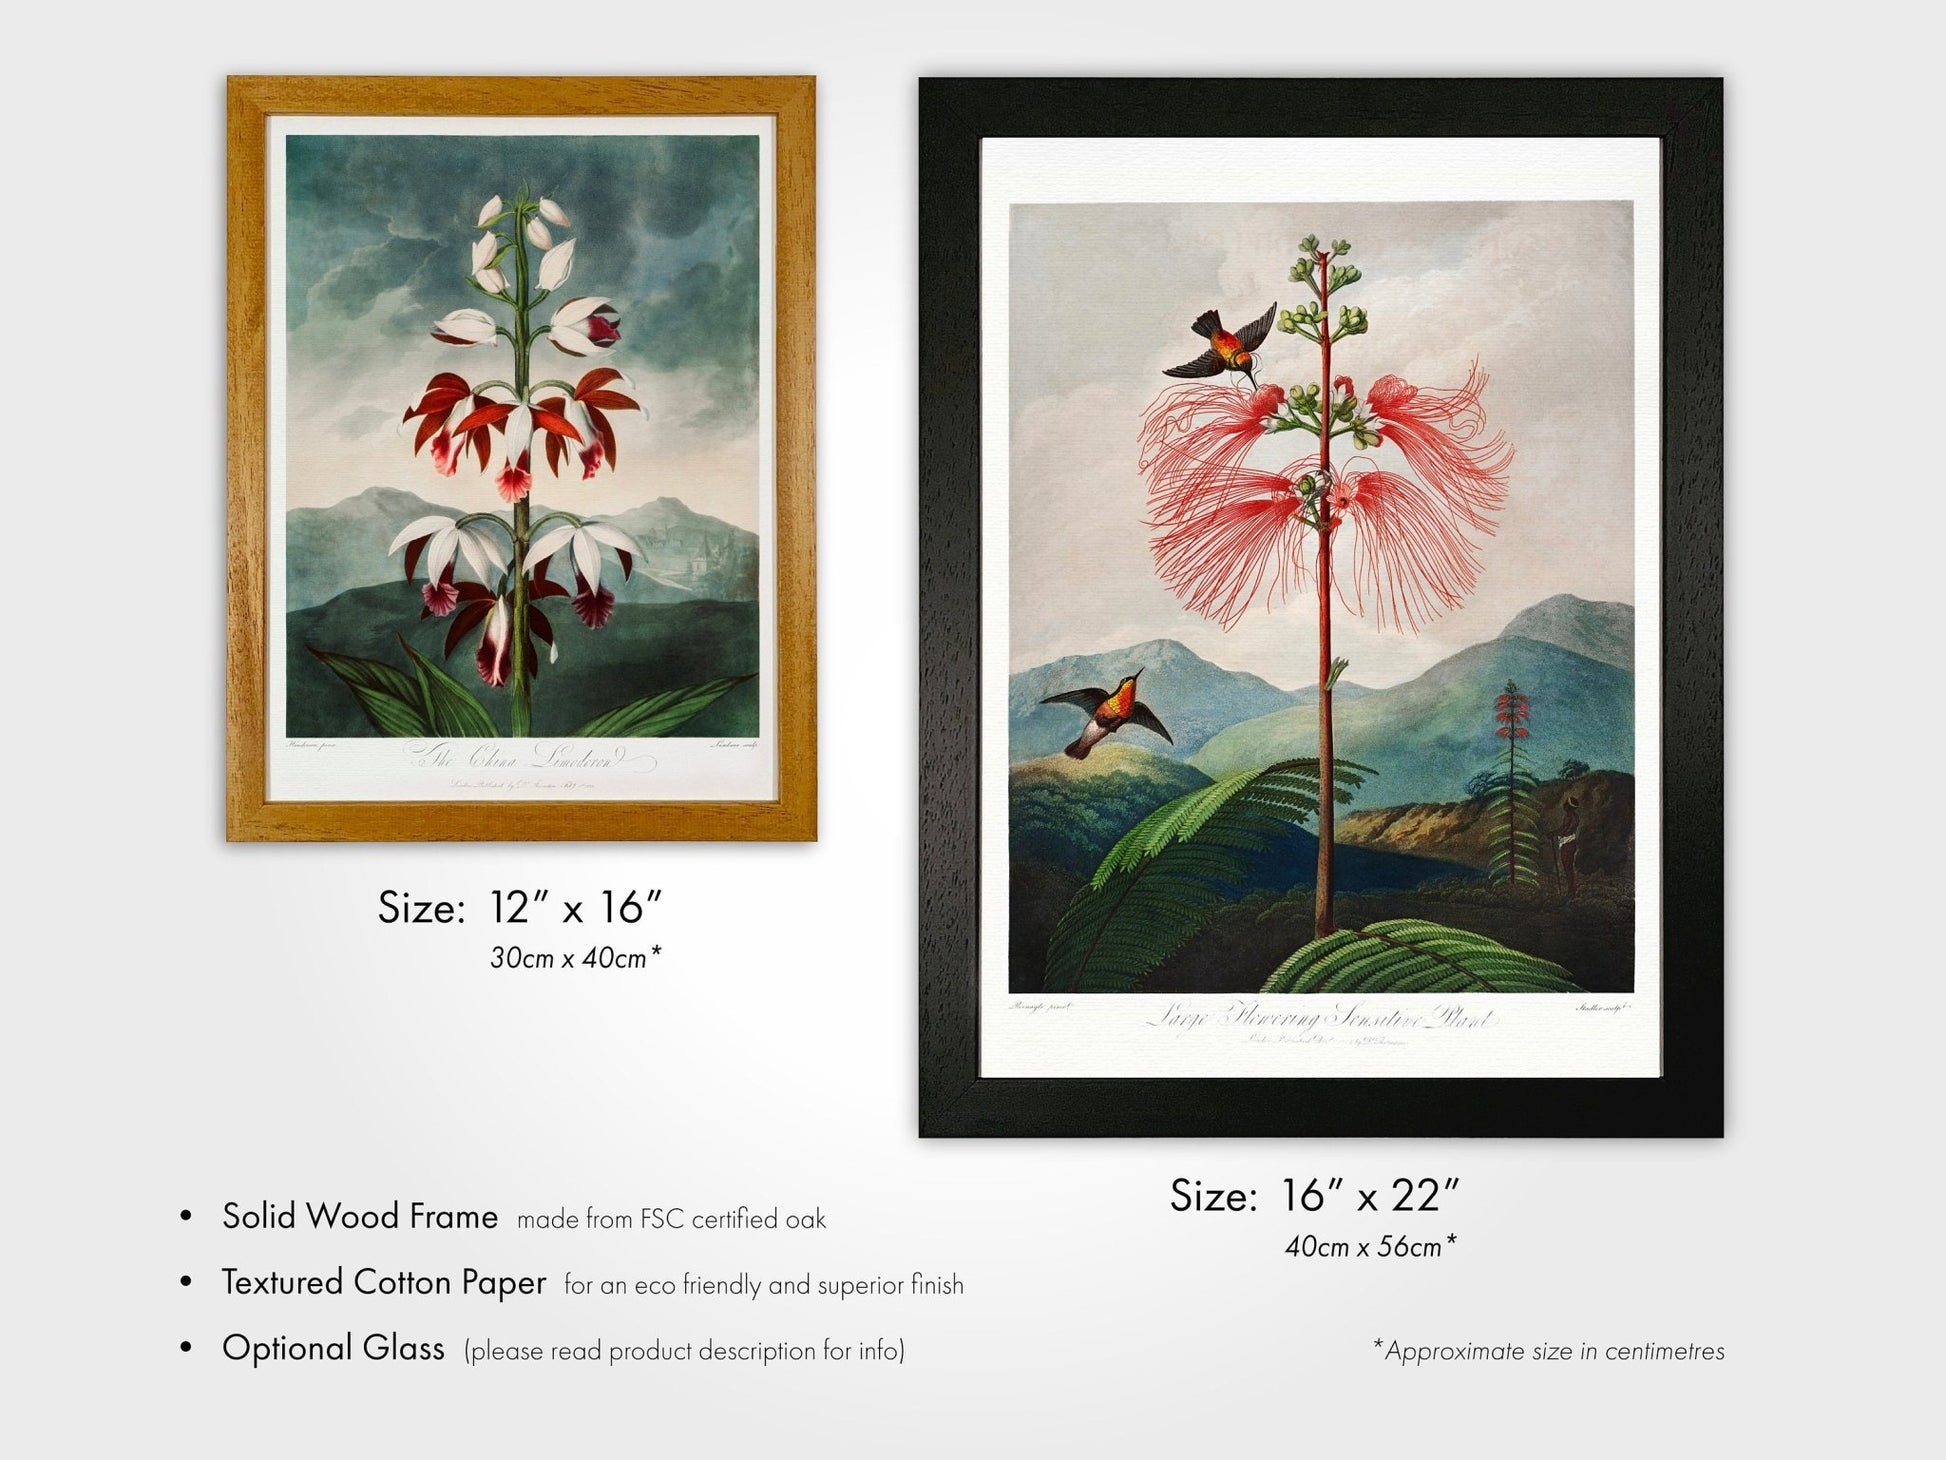 TEMPLE OF FLORA - Cupid Inspiring Plants with Love - Pathos Studio - Art Prints